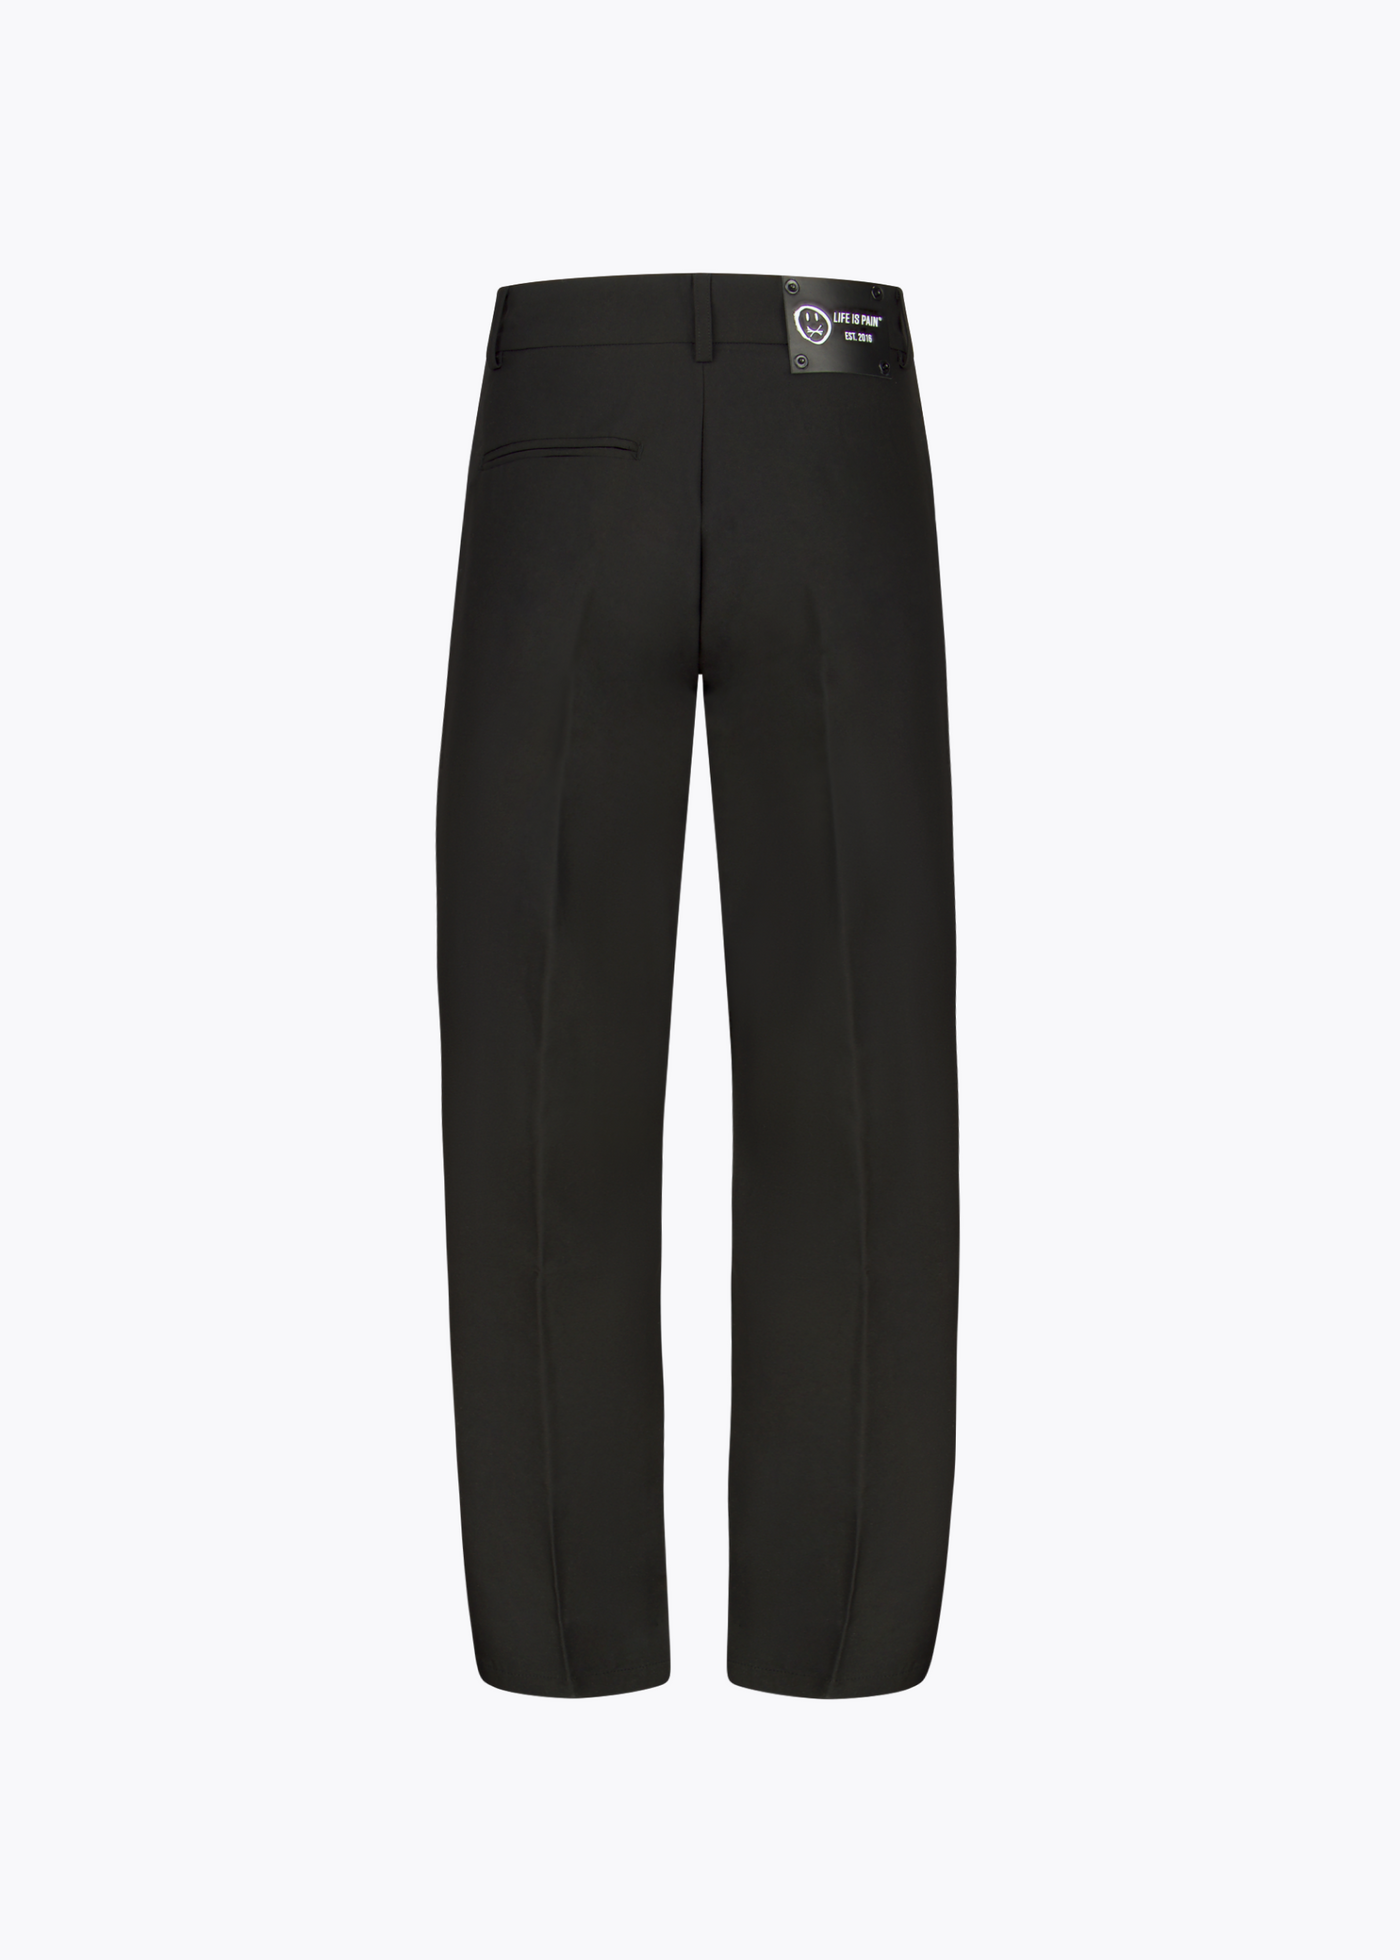 Black fabric pants